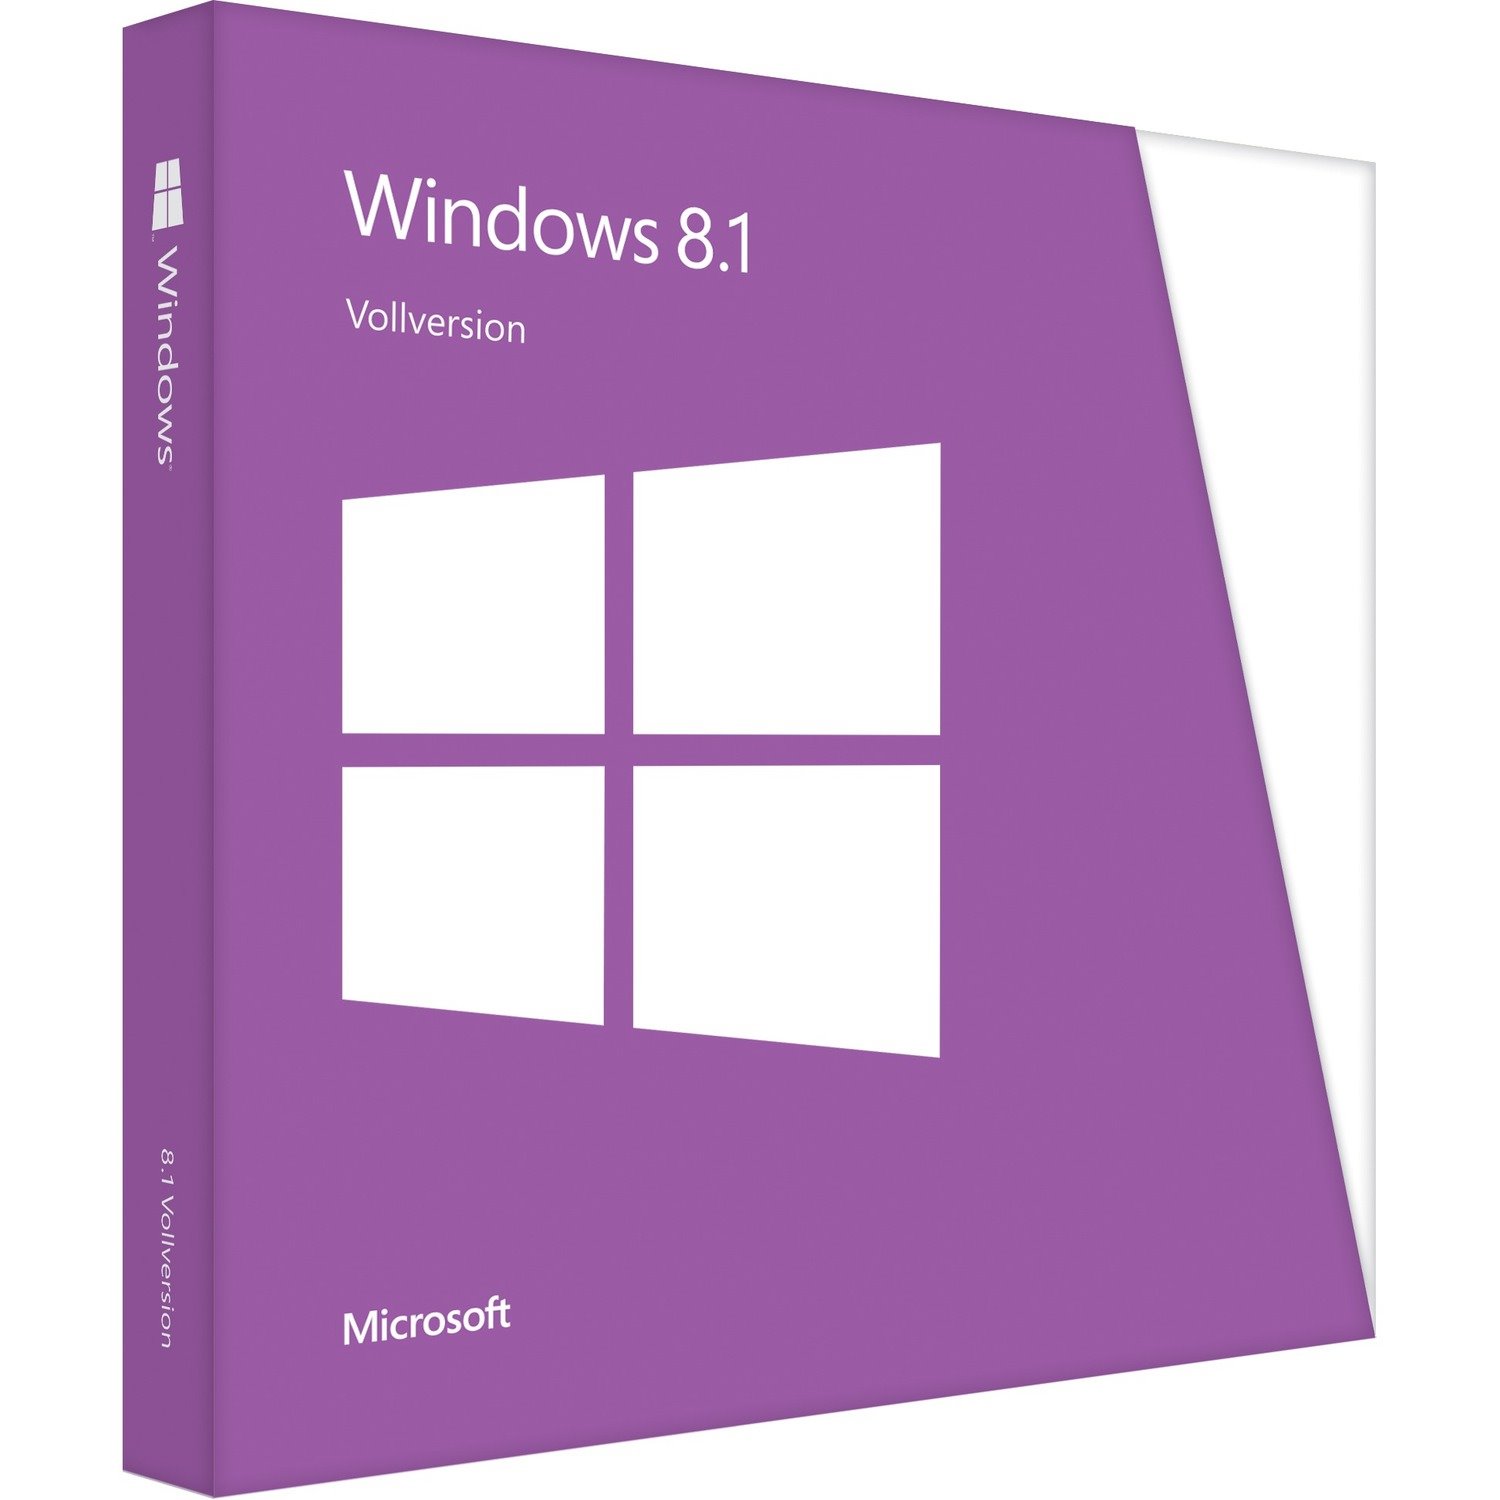 Microsoft Windows 8.1 64-bit - License and Media - OEM